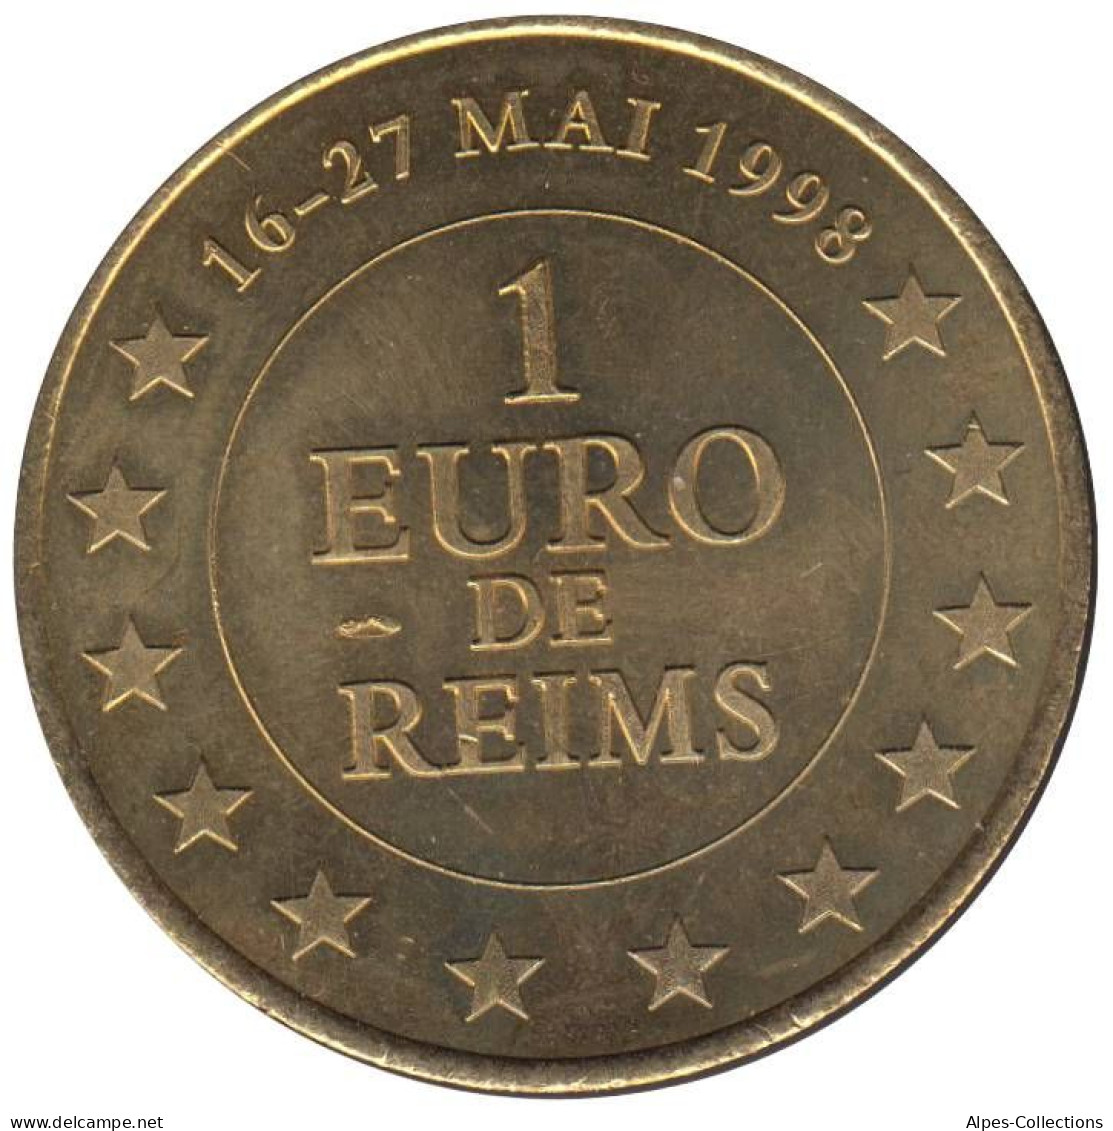 REIMS - EU0010.1 - 1 EURO DES VILLES -  Réf: T545 - 1998 - Euros De Las Ciudades